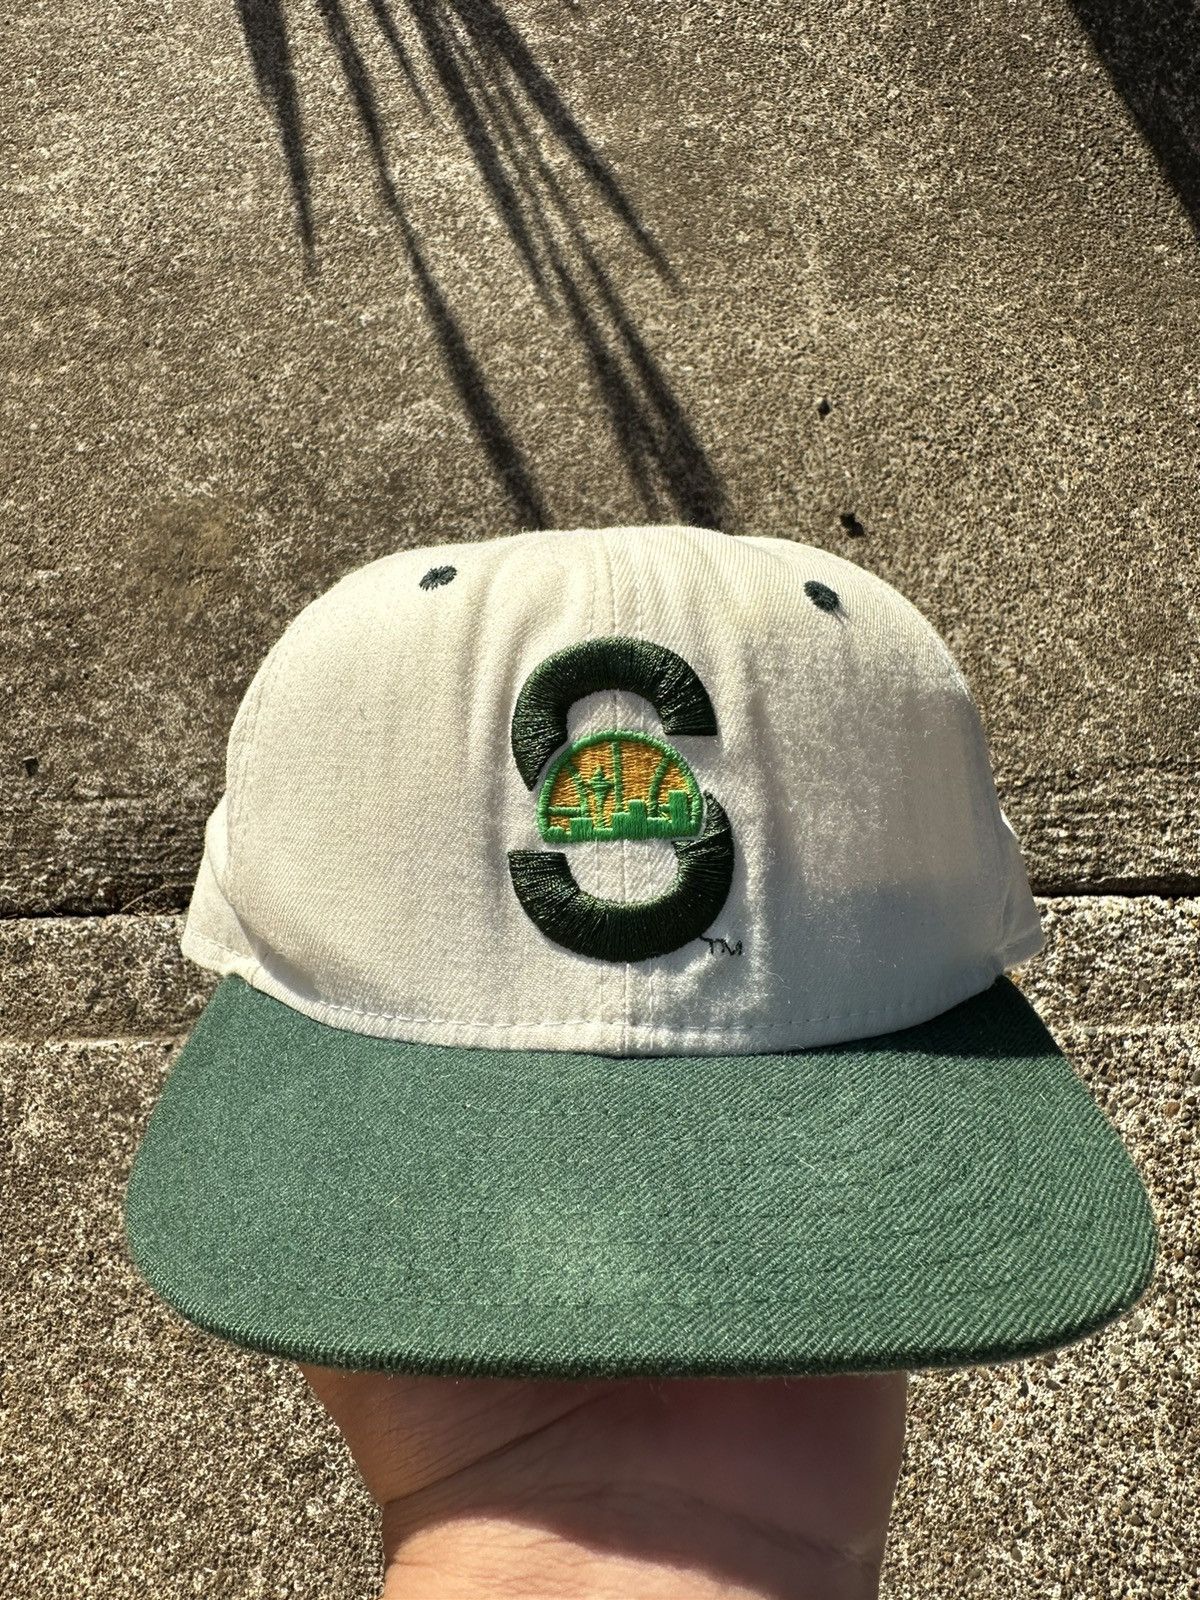 Seattle Super Sonics Vintage 90s the Game Snapback Hat 